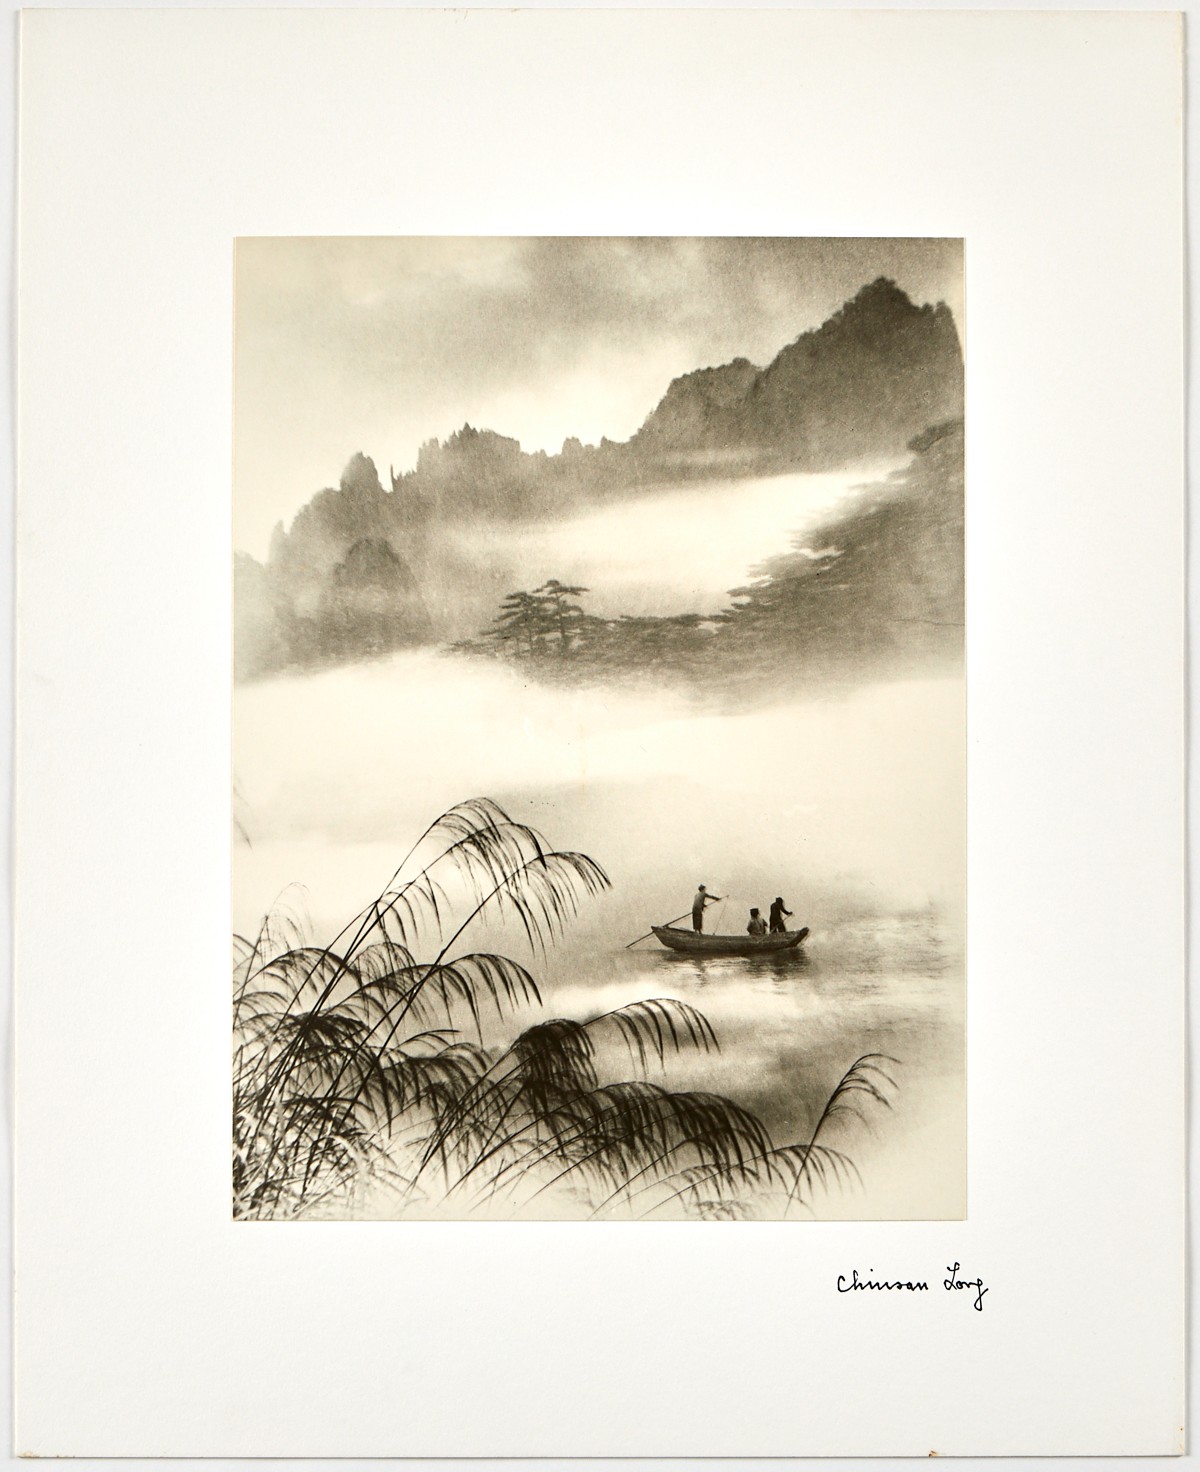 Chin San Long Photograph - An Excursion - Image 2 of 3